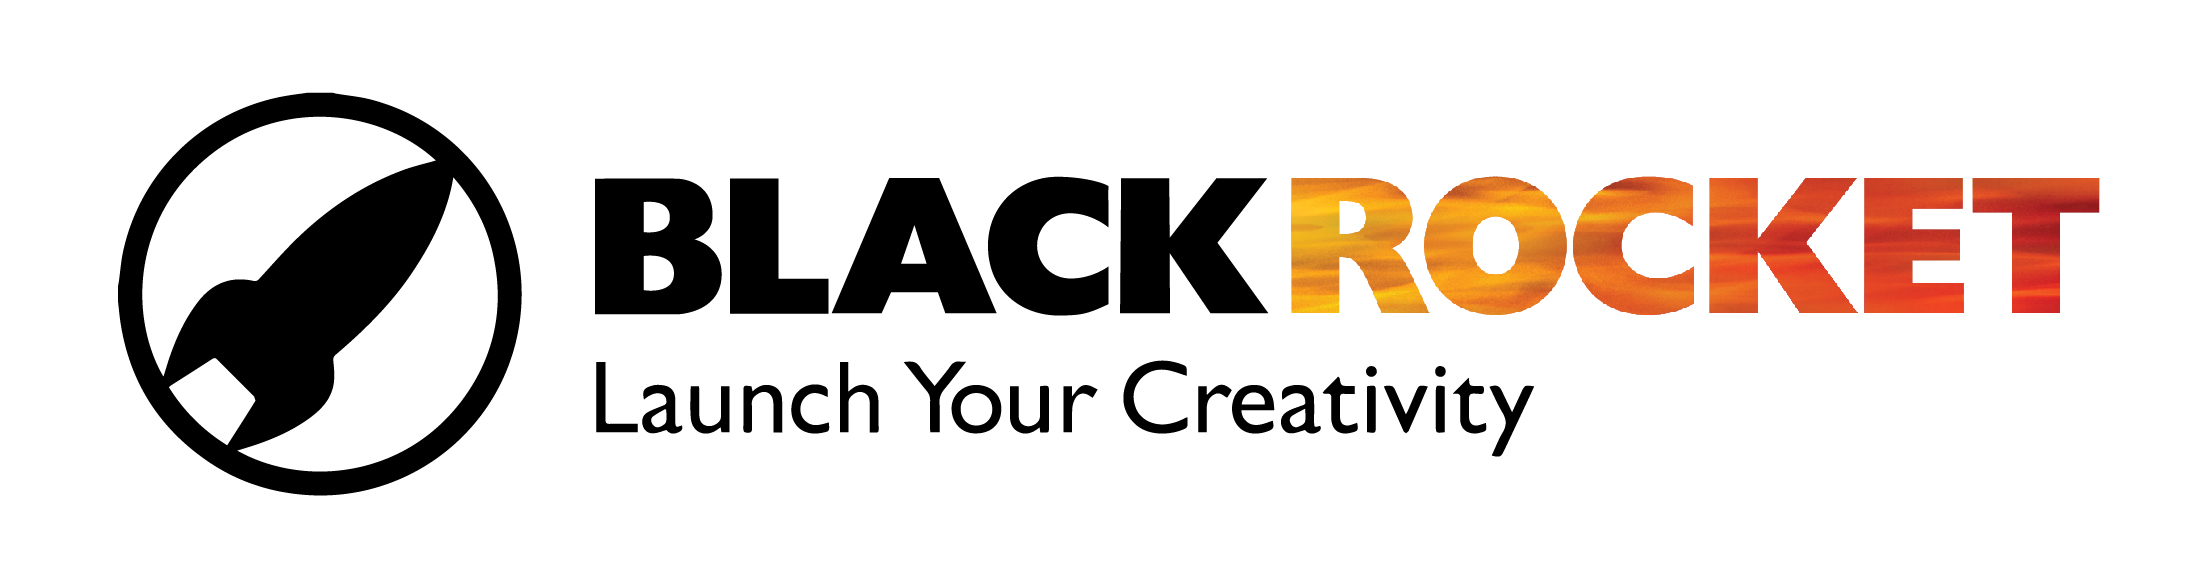 Black Rocket: Launch Your Creativity